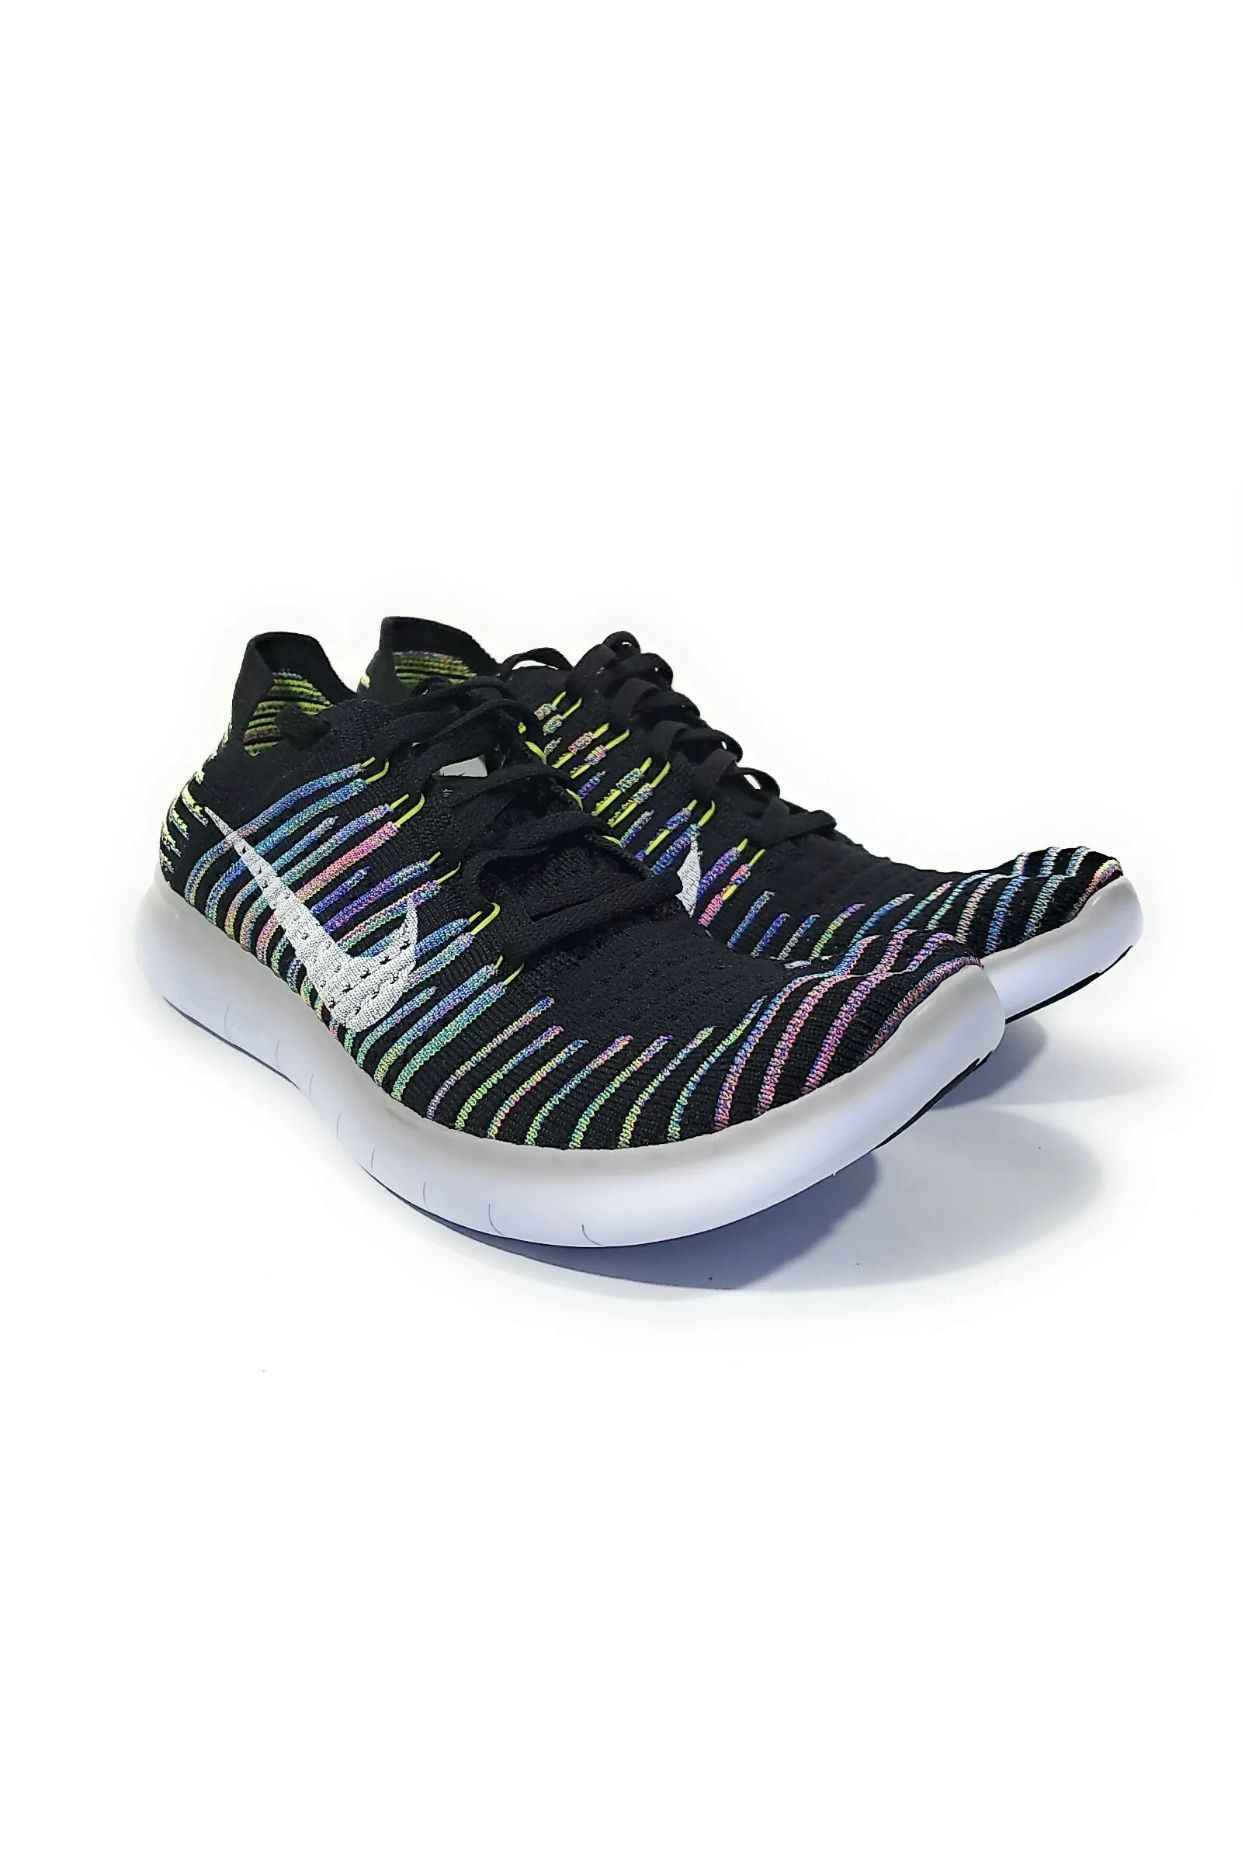 Nike Free RN Flyknit Womens Running Shoes Black Multi Size 10